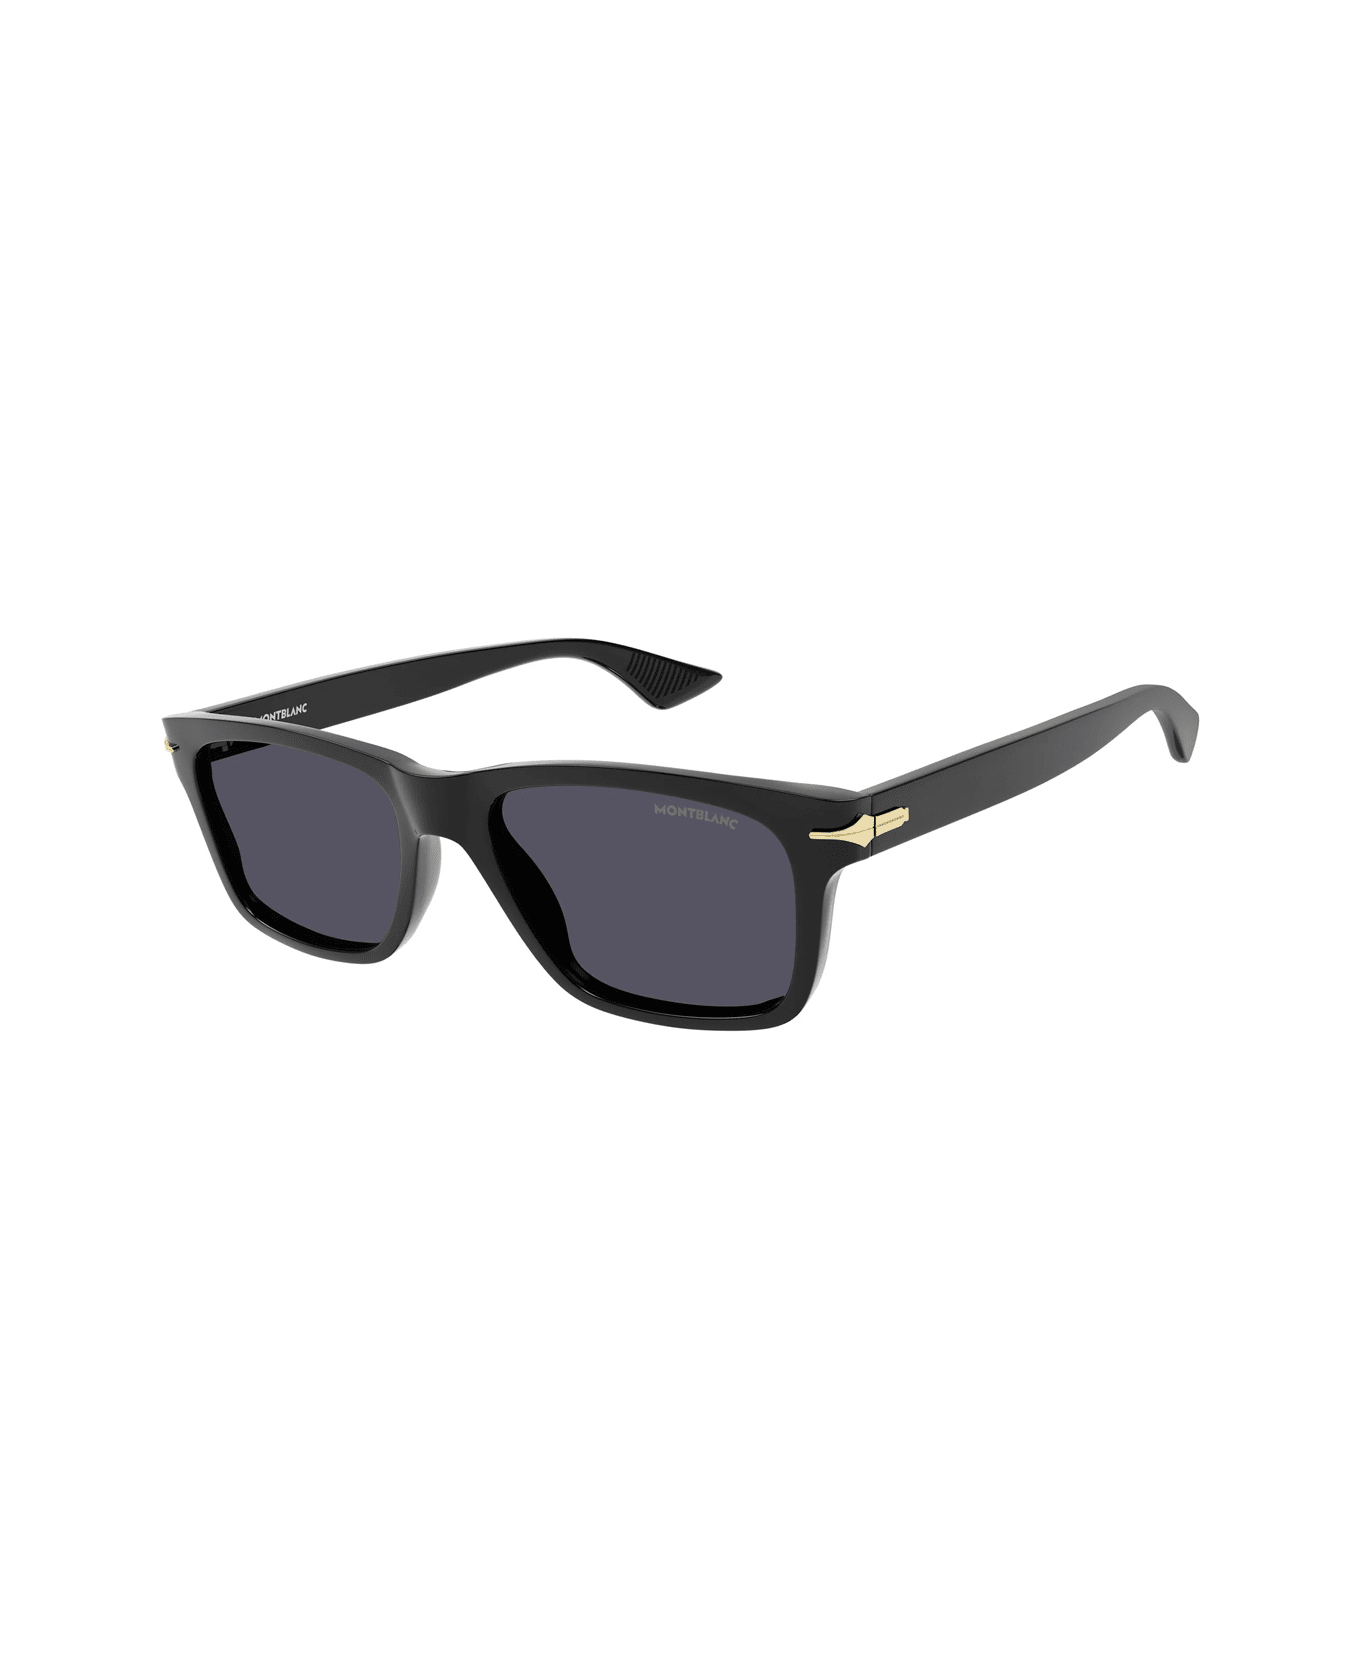 Montblanc Mb0263s Linea Nib 001 Sunglasses - Nero